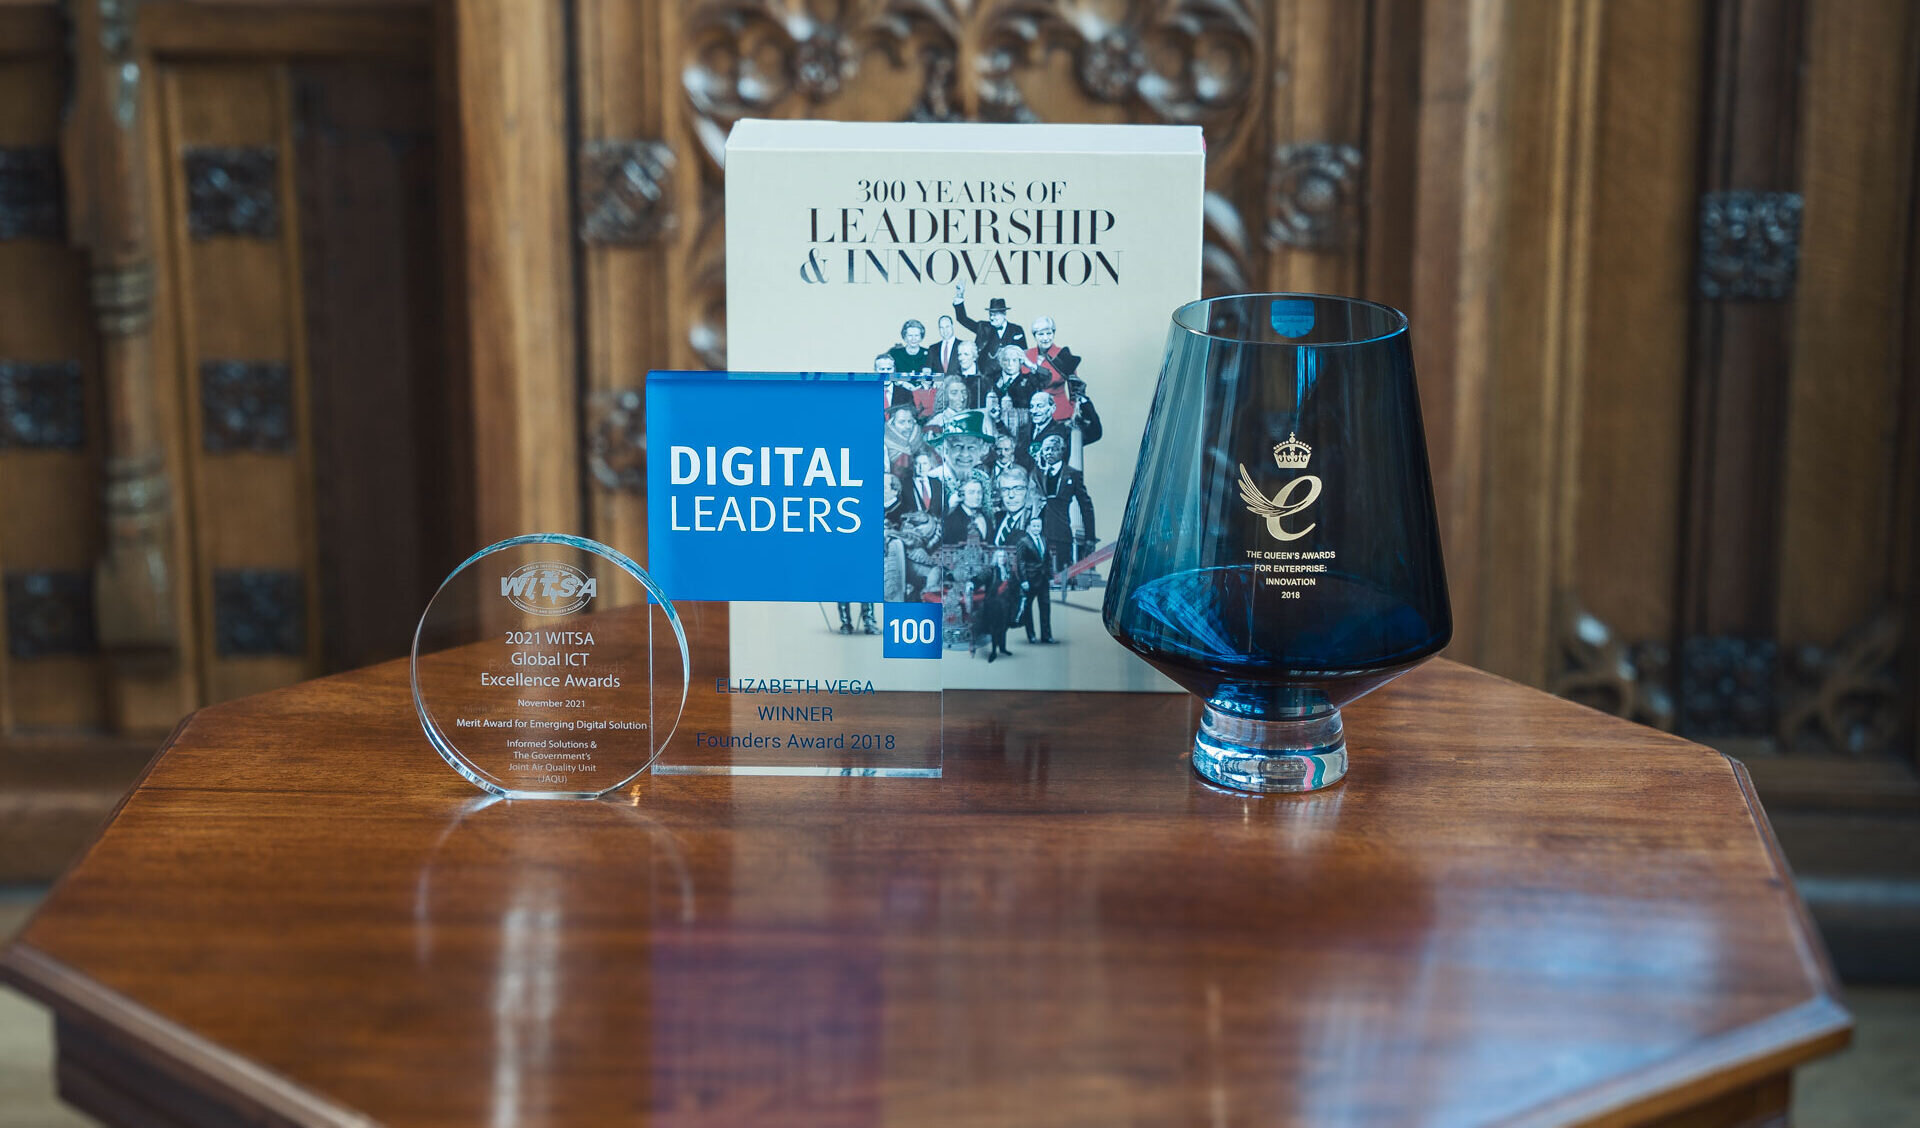 Reputation - Digital Leader / Queens Award / WITSA